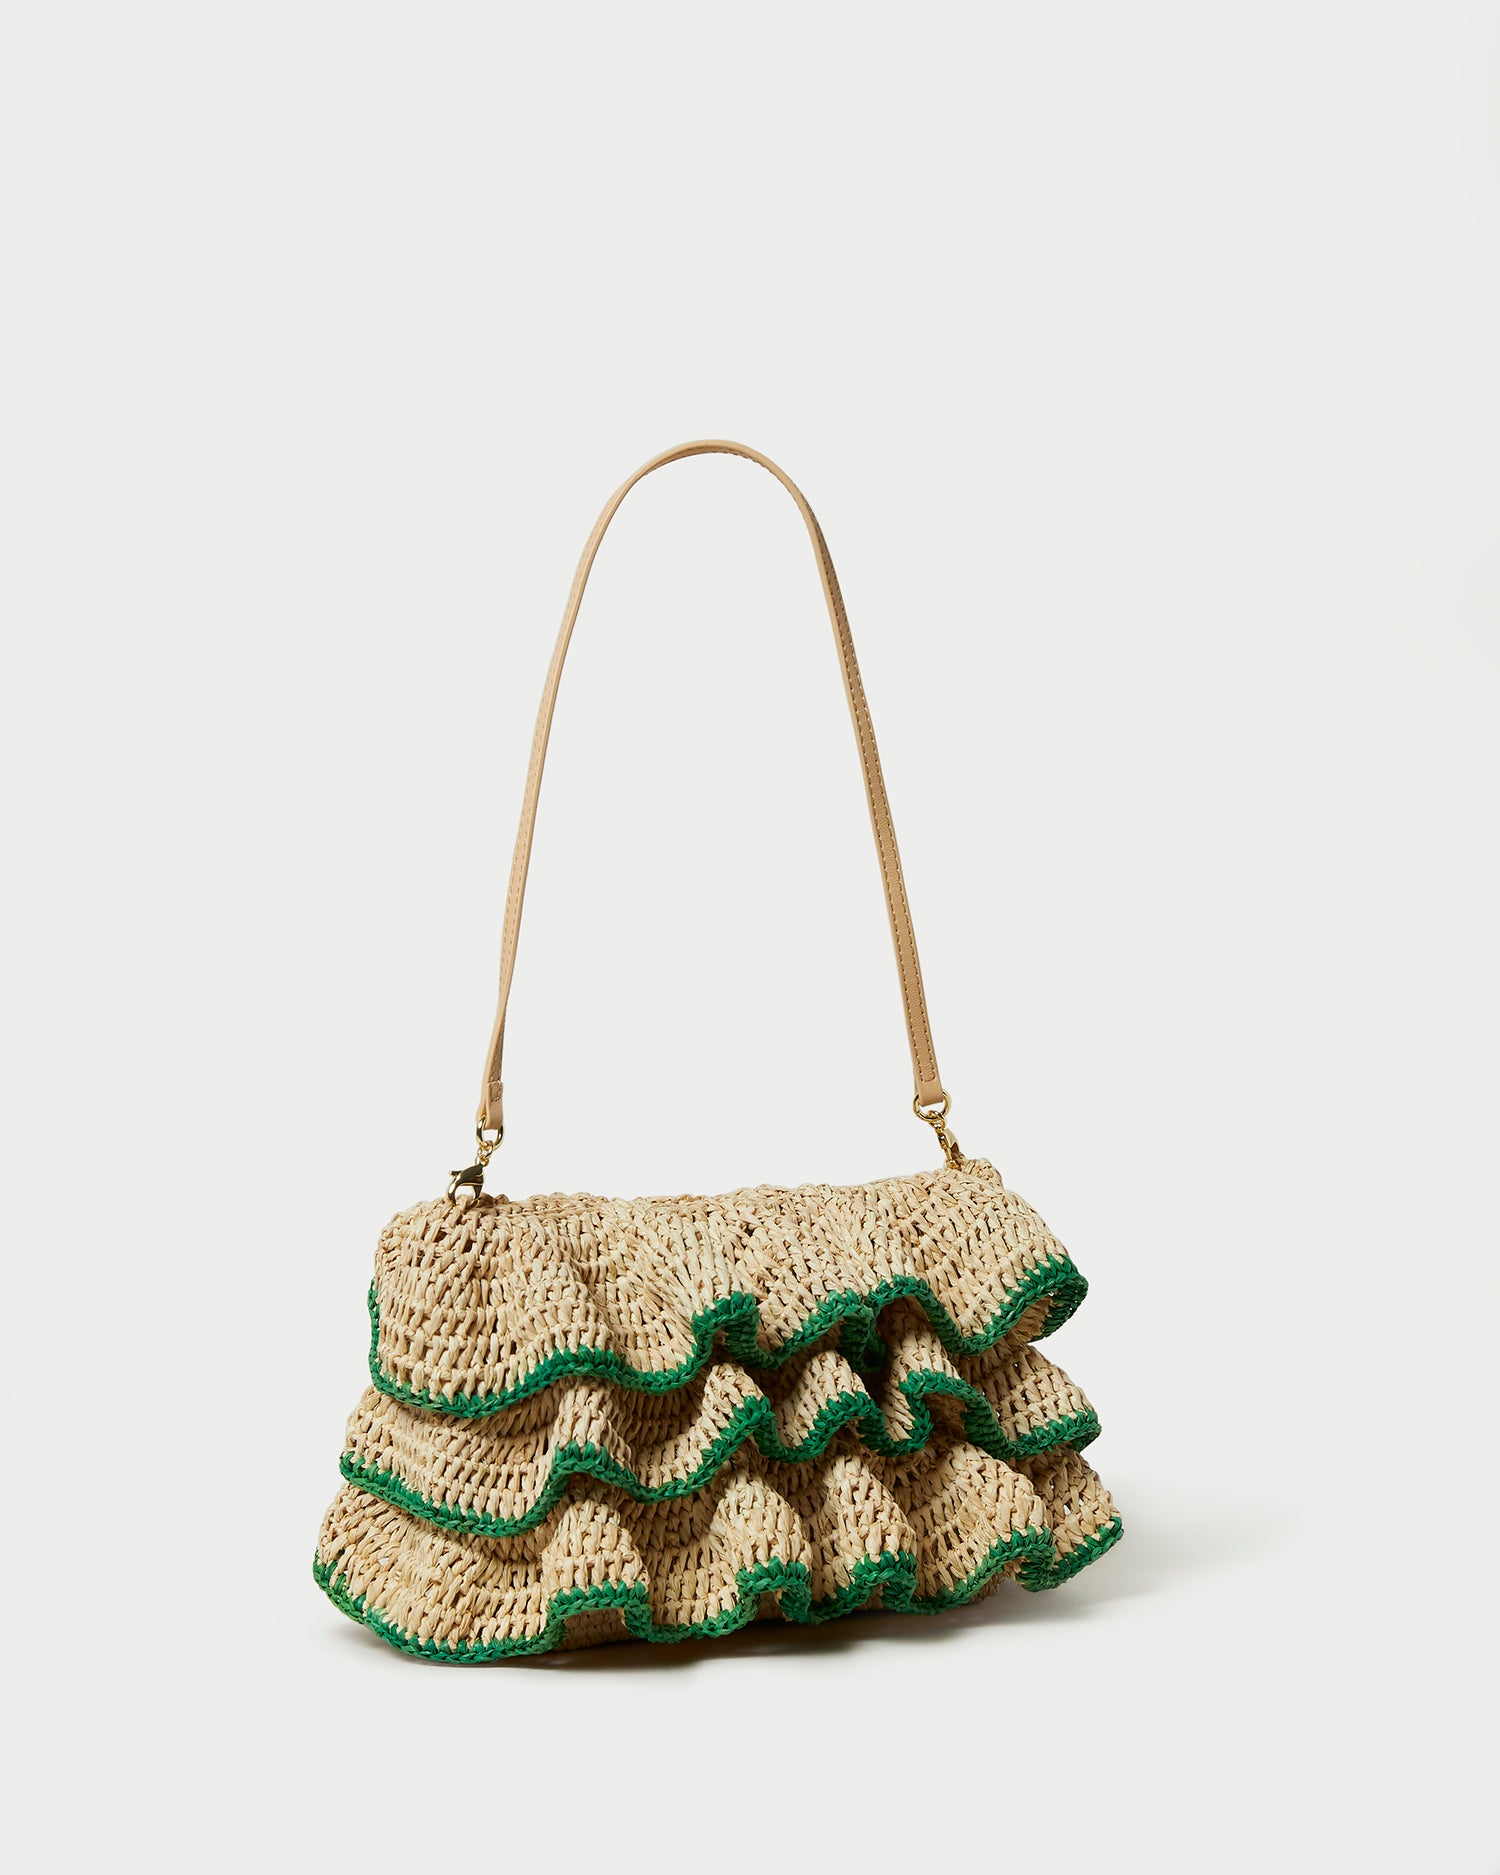 PRADA Crochet Ruffle Handbag in Black - More Than You Can Imagine